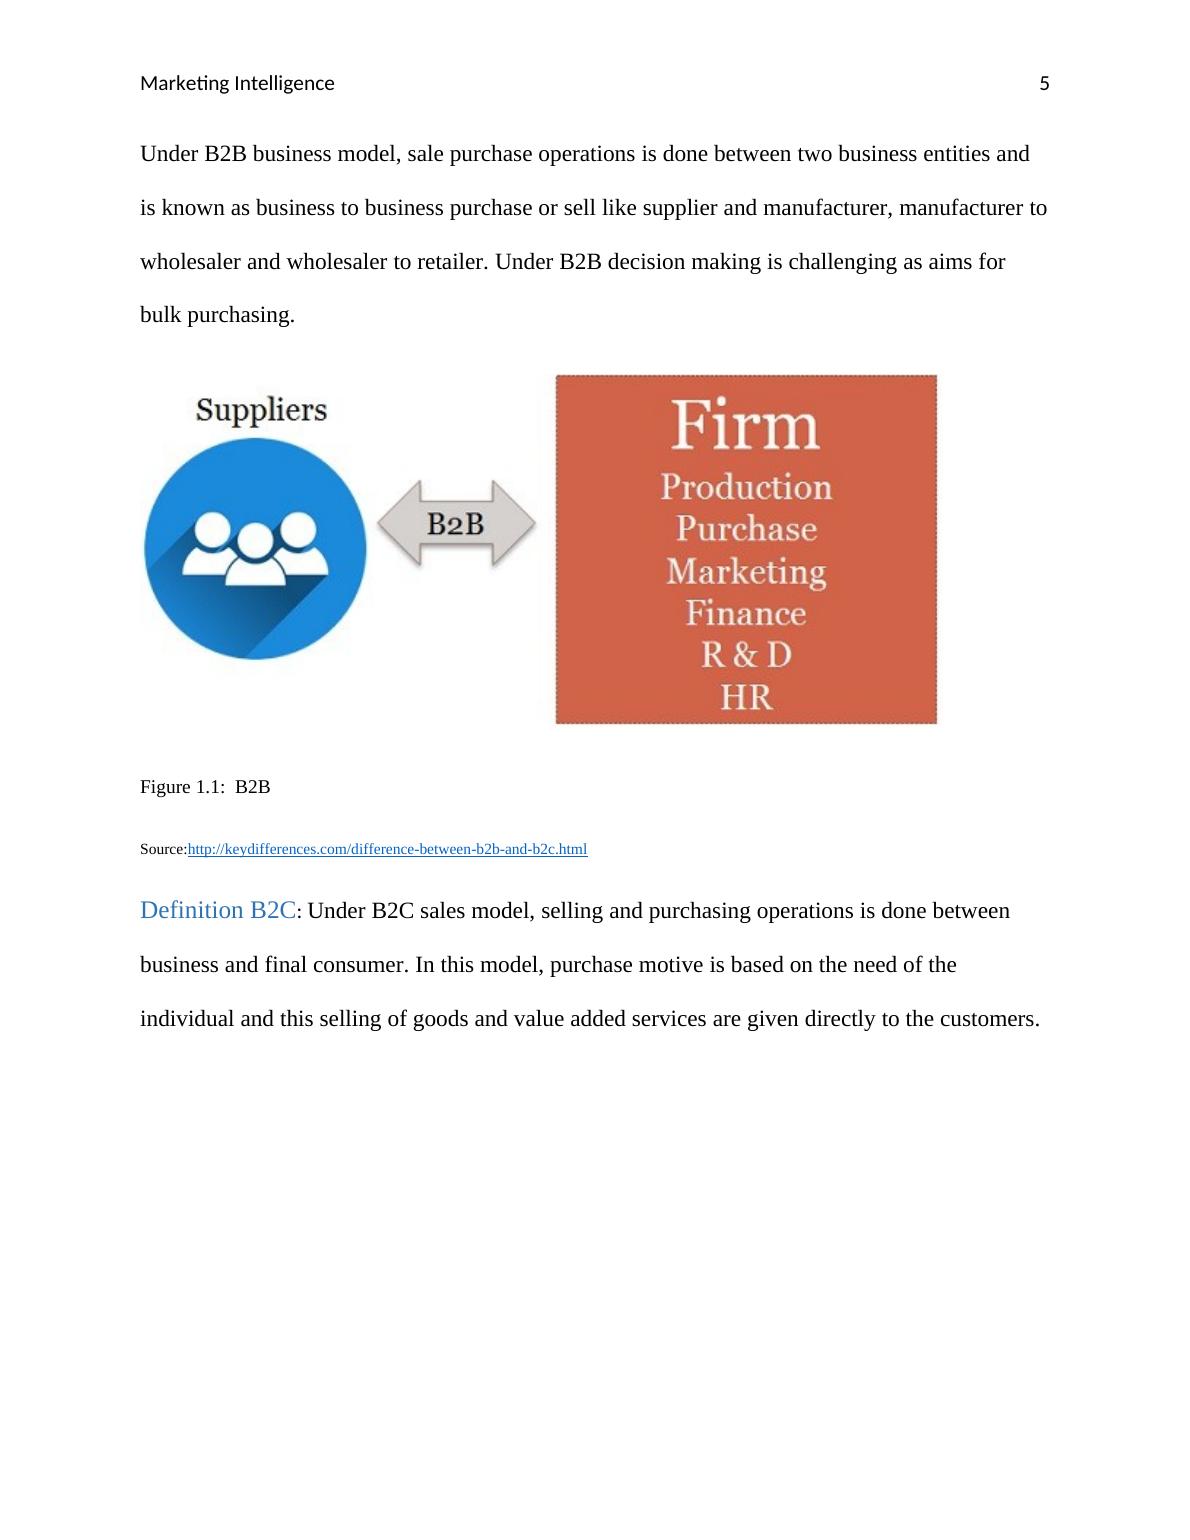 Report on the Marketing Intelligence_6